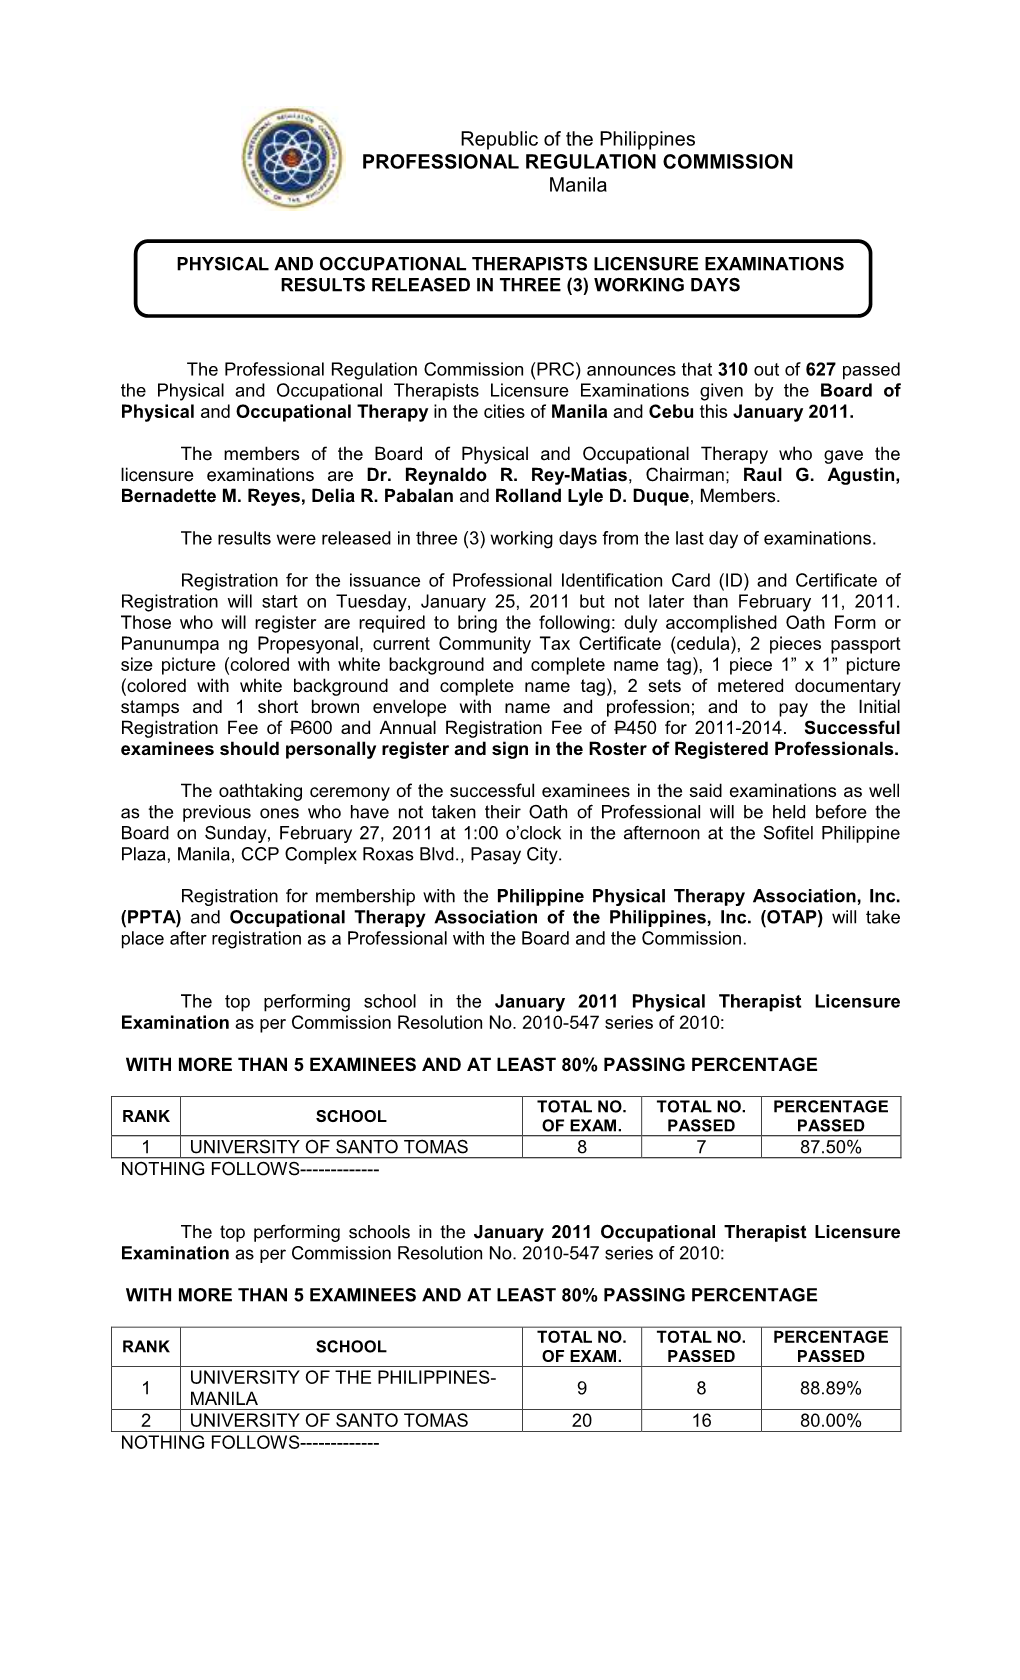 Republic of the Philippines PROFESSIONAL REGULATION COMMISSION Manila